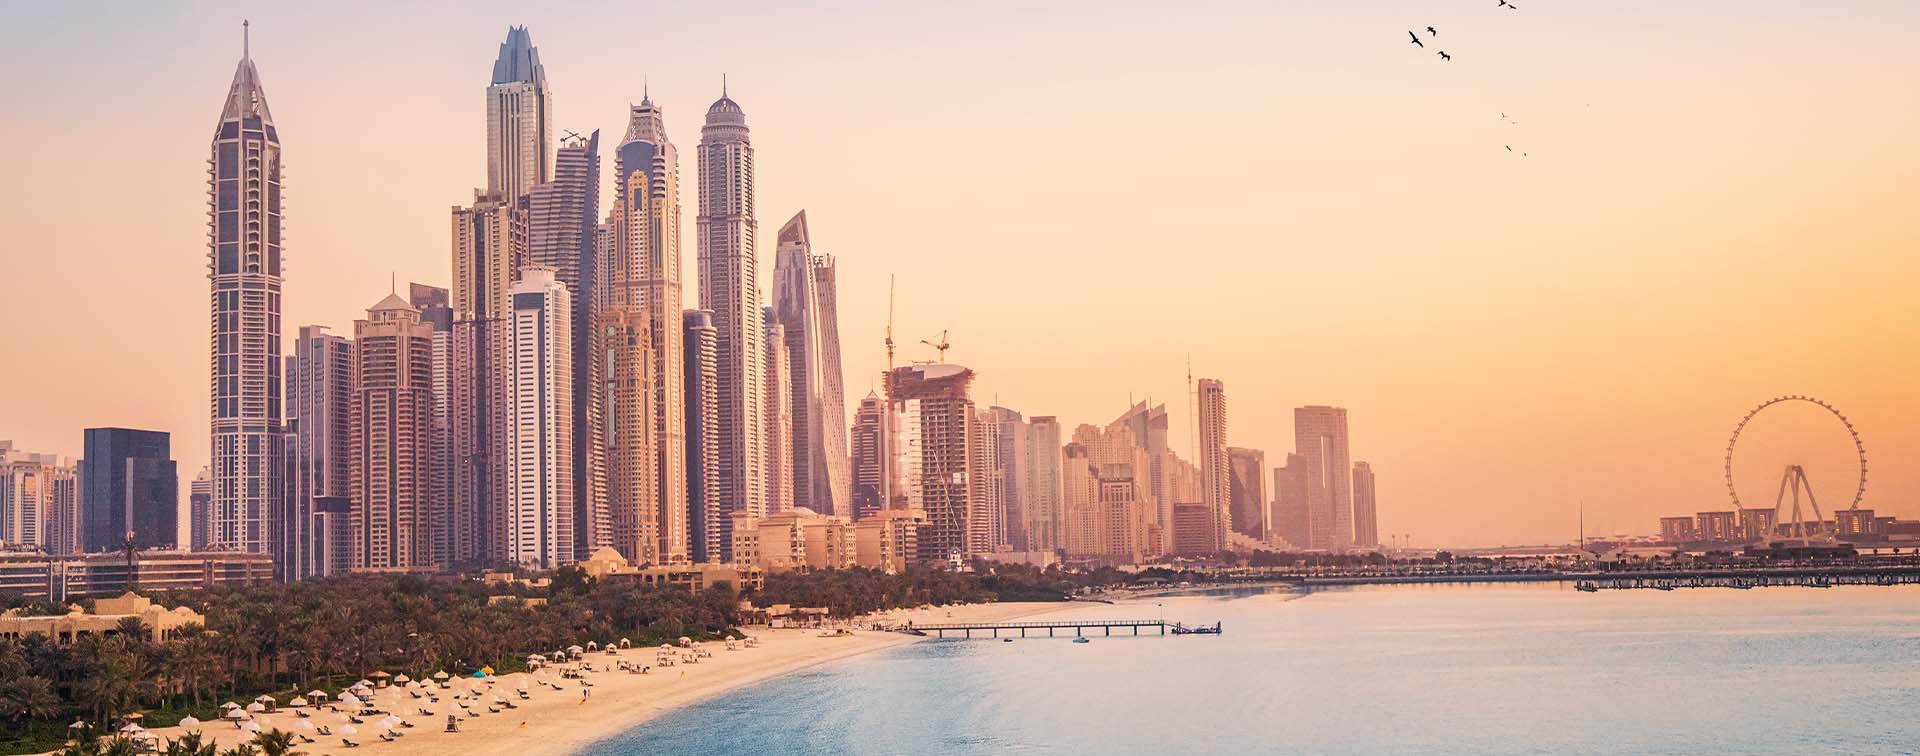 Sunset view of Dubai Marina and Jumira Beach Residence area with ferris wheel and golden sand beaches in the Persian Gulf